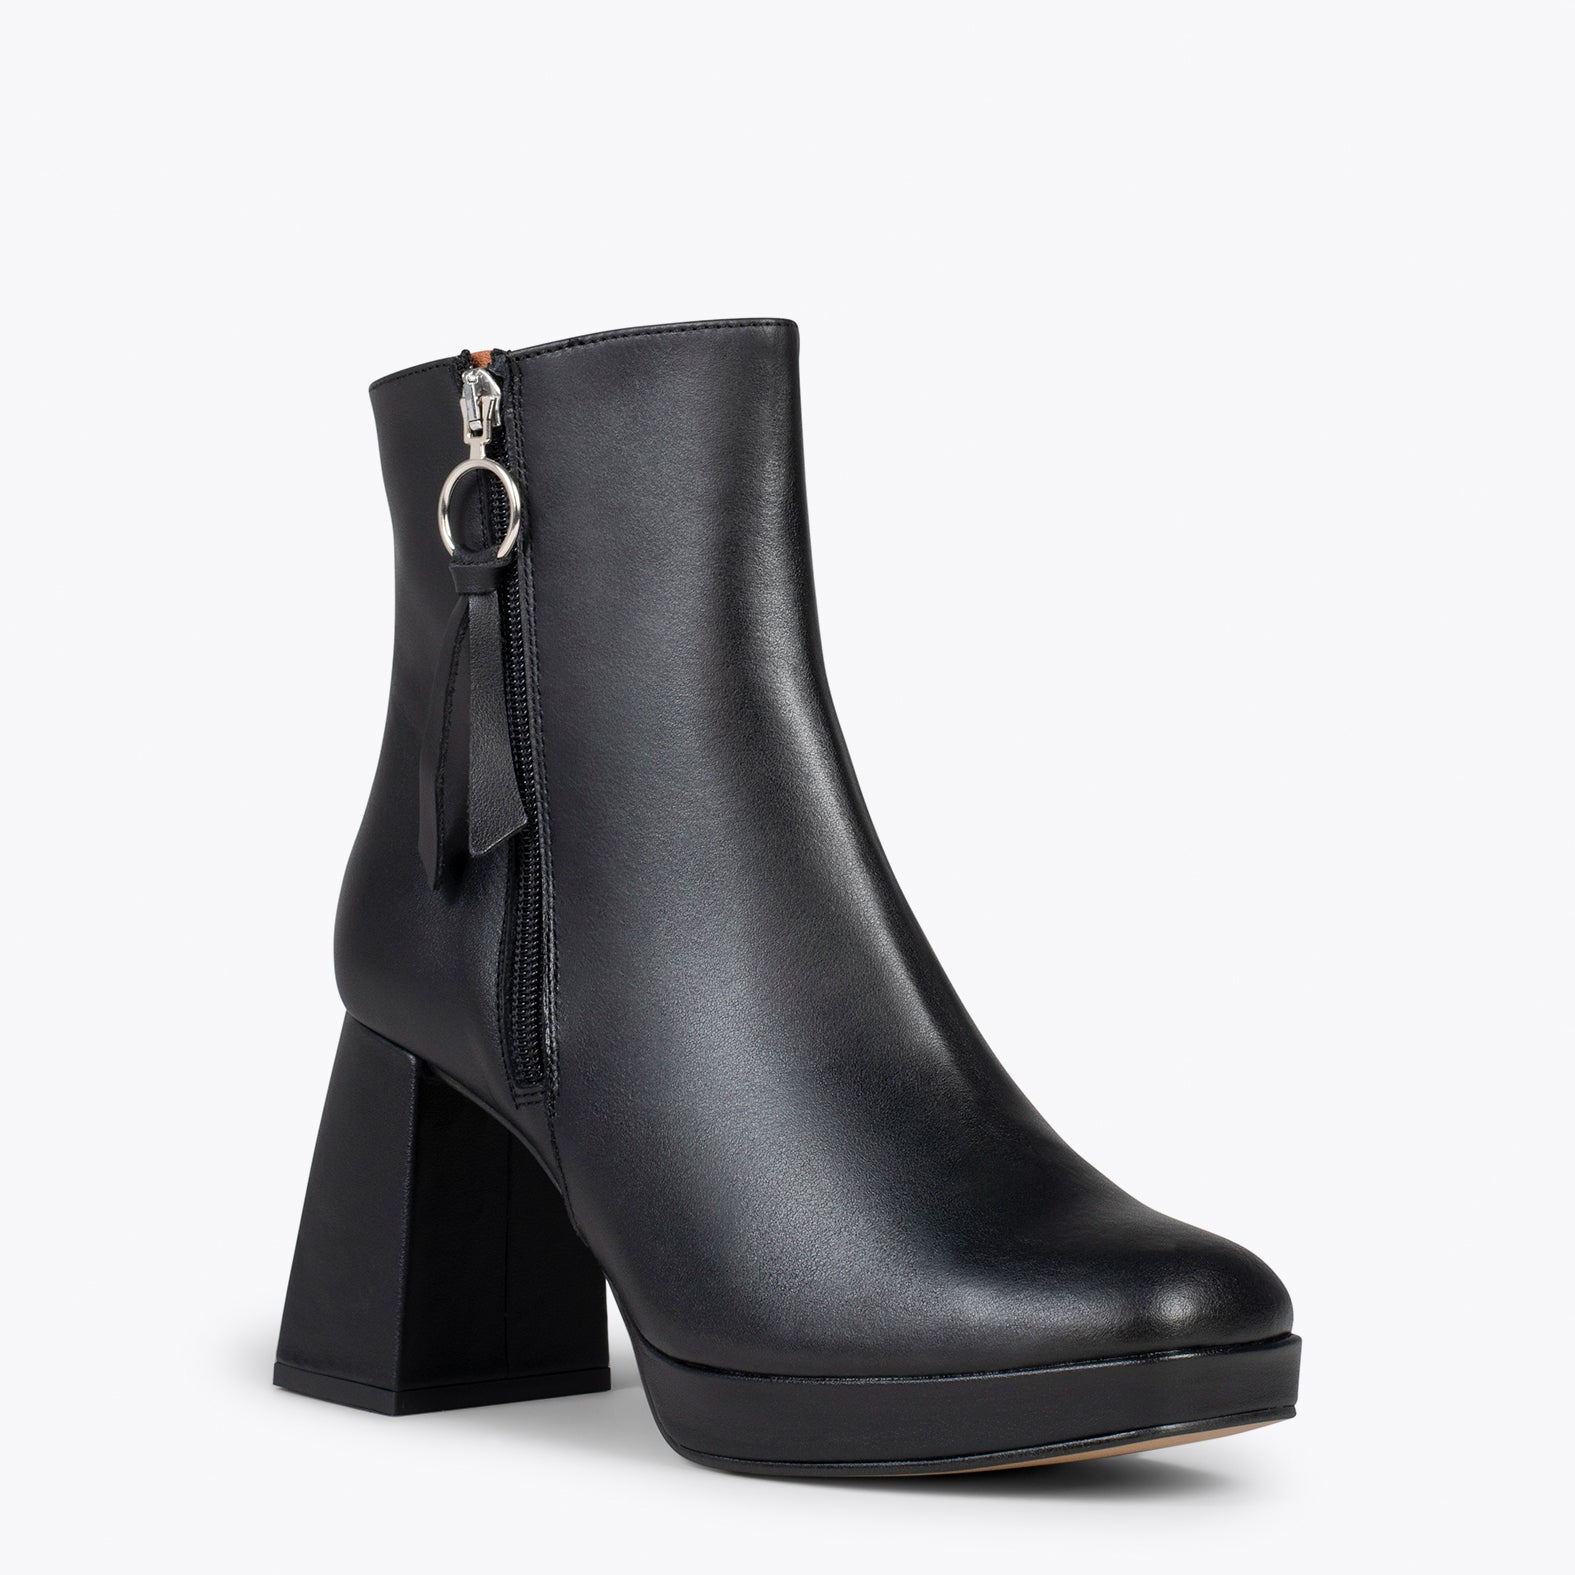 SIENA – BLACK platform block heel ankle boots 